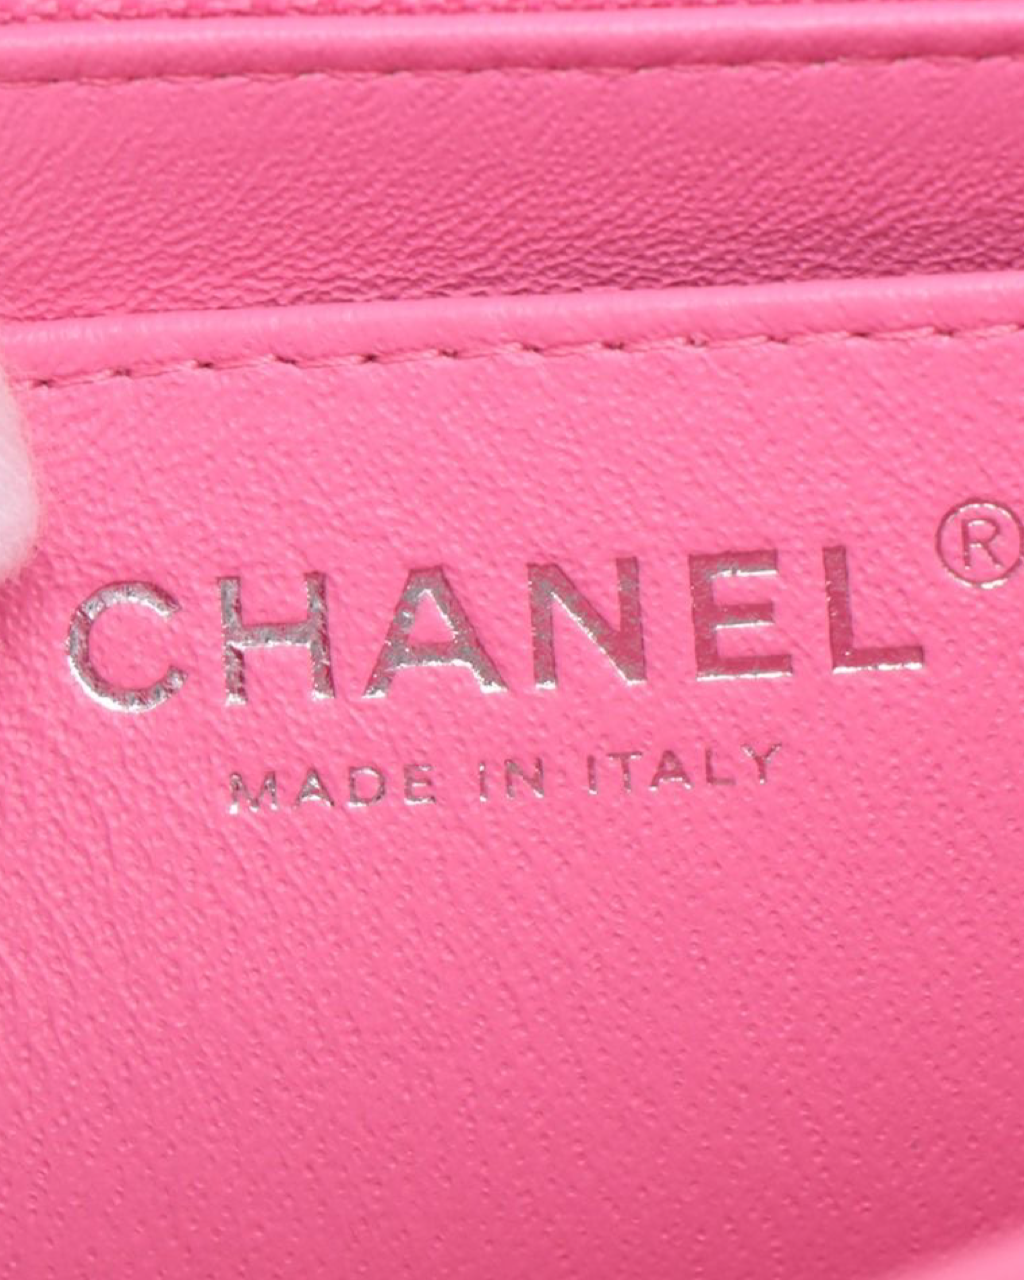 Bolsa Chanel Mini Classic Flap